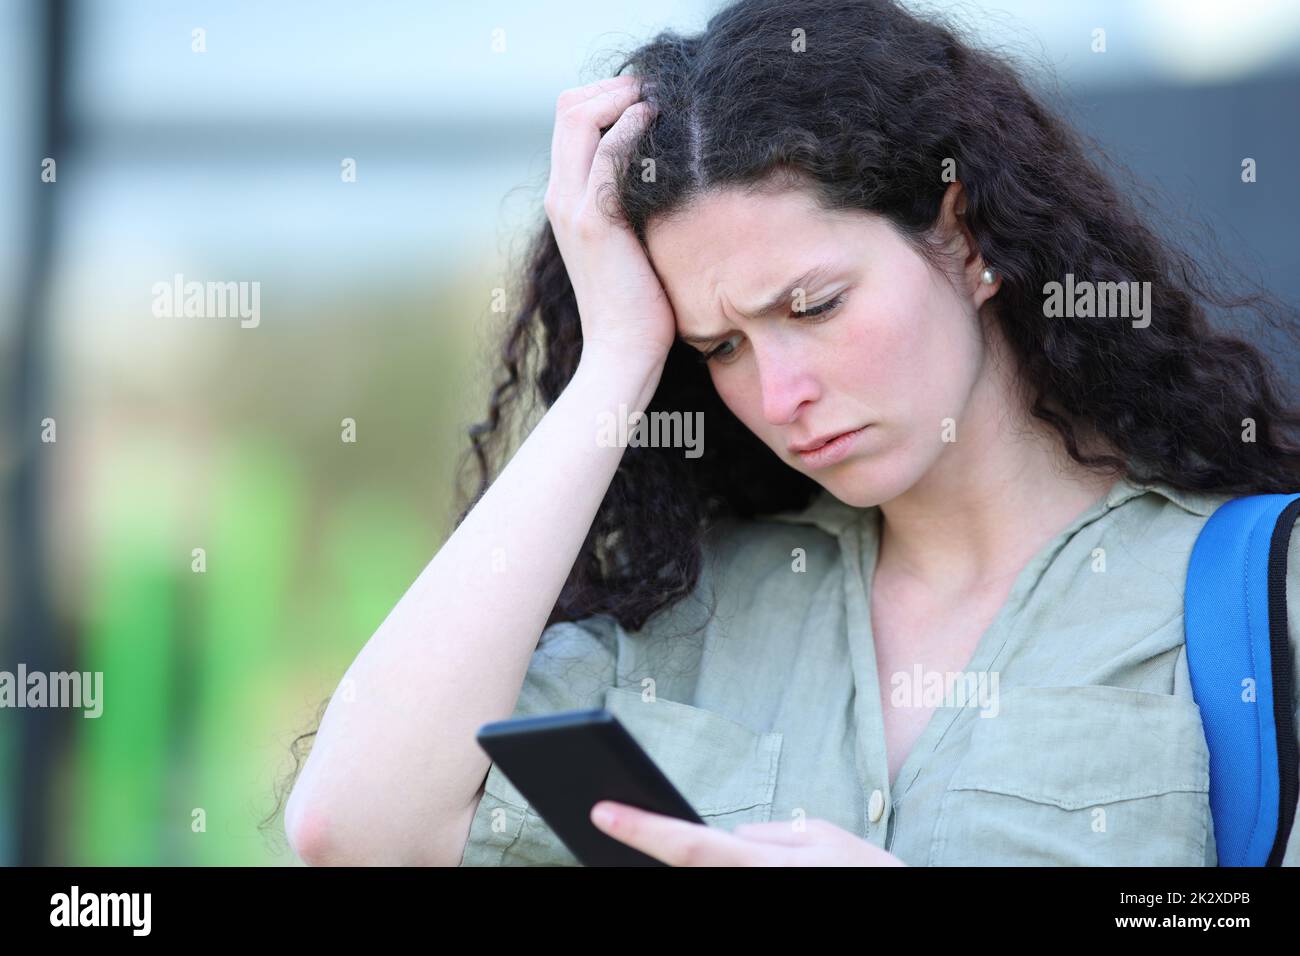 Sad student complaining reading message on phone Stock Photo